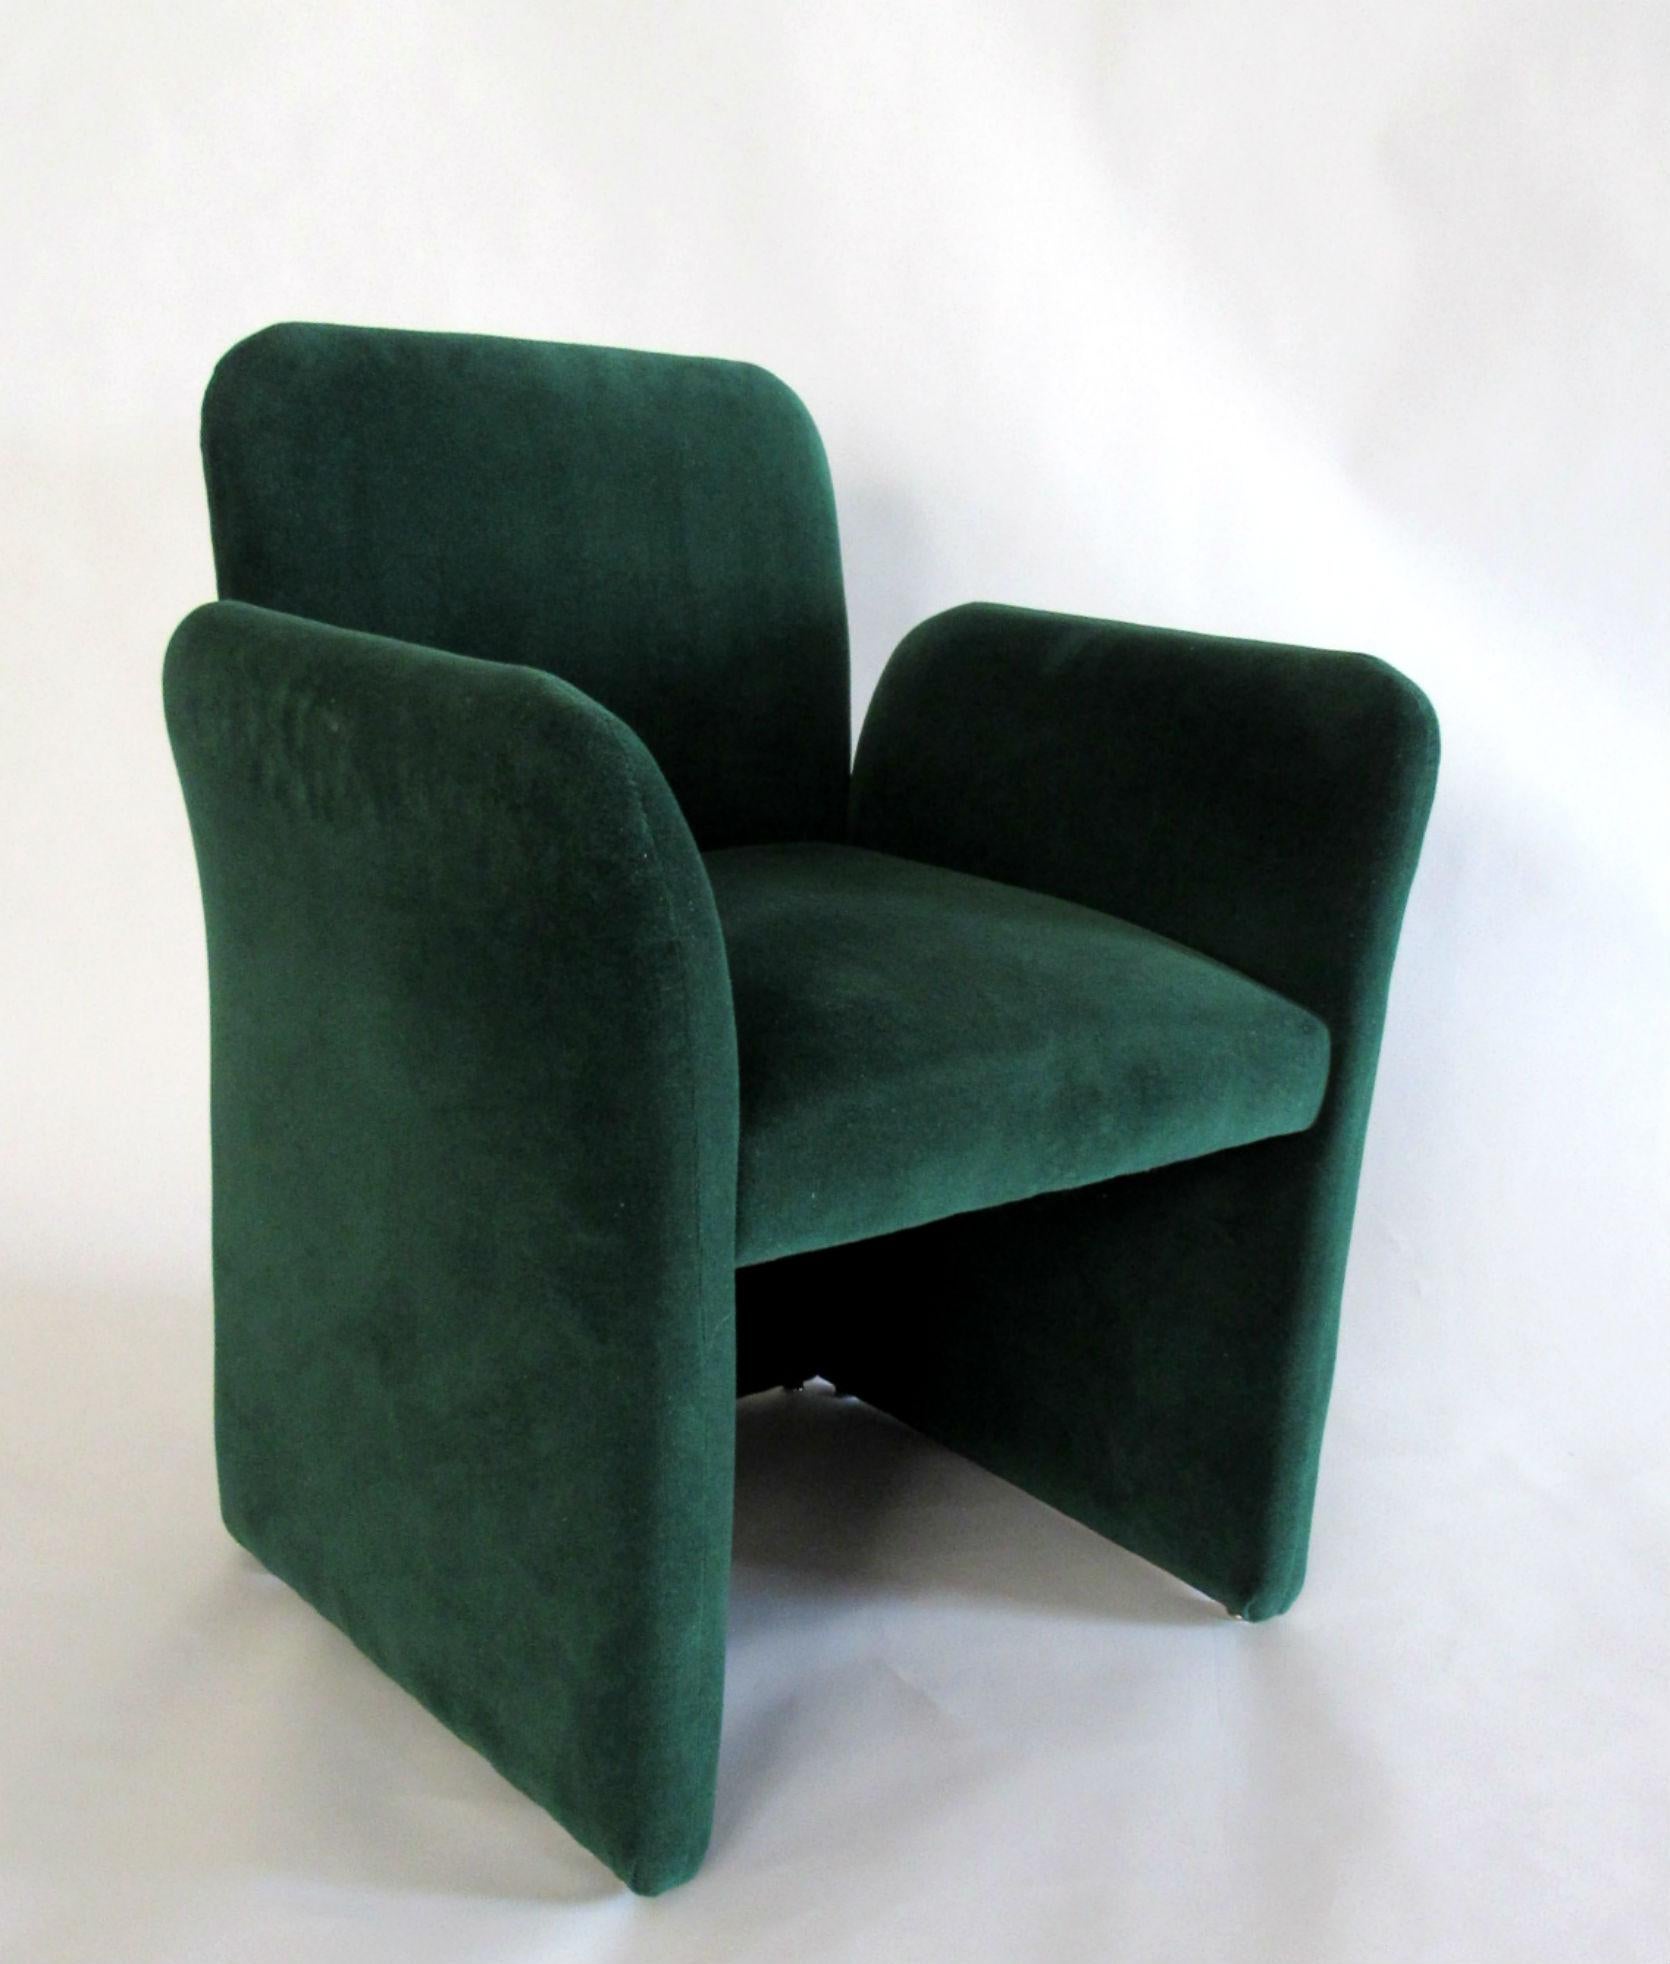 American Pair of Emerald Green Velvet Upholstered Armchairs by Leon Rosen for Pace, 1980s